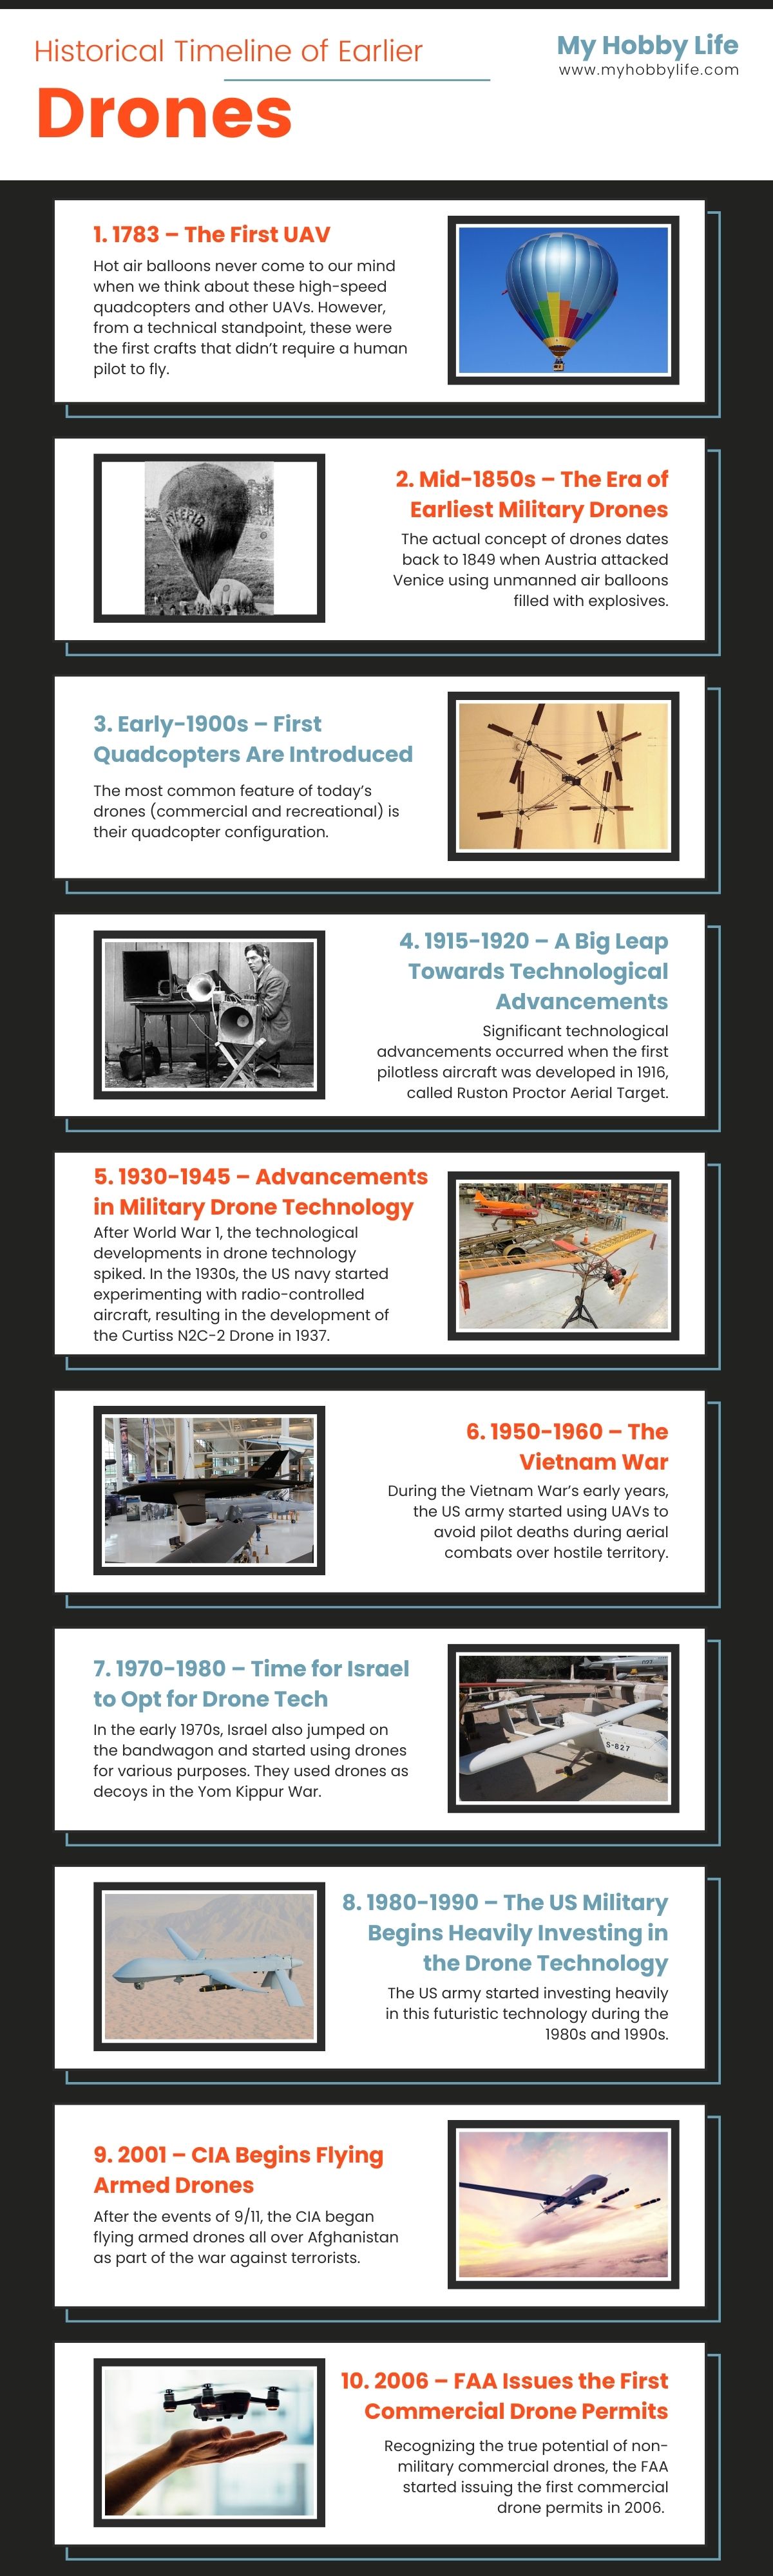 Historical Timeline of Earlier Drones